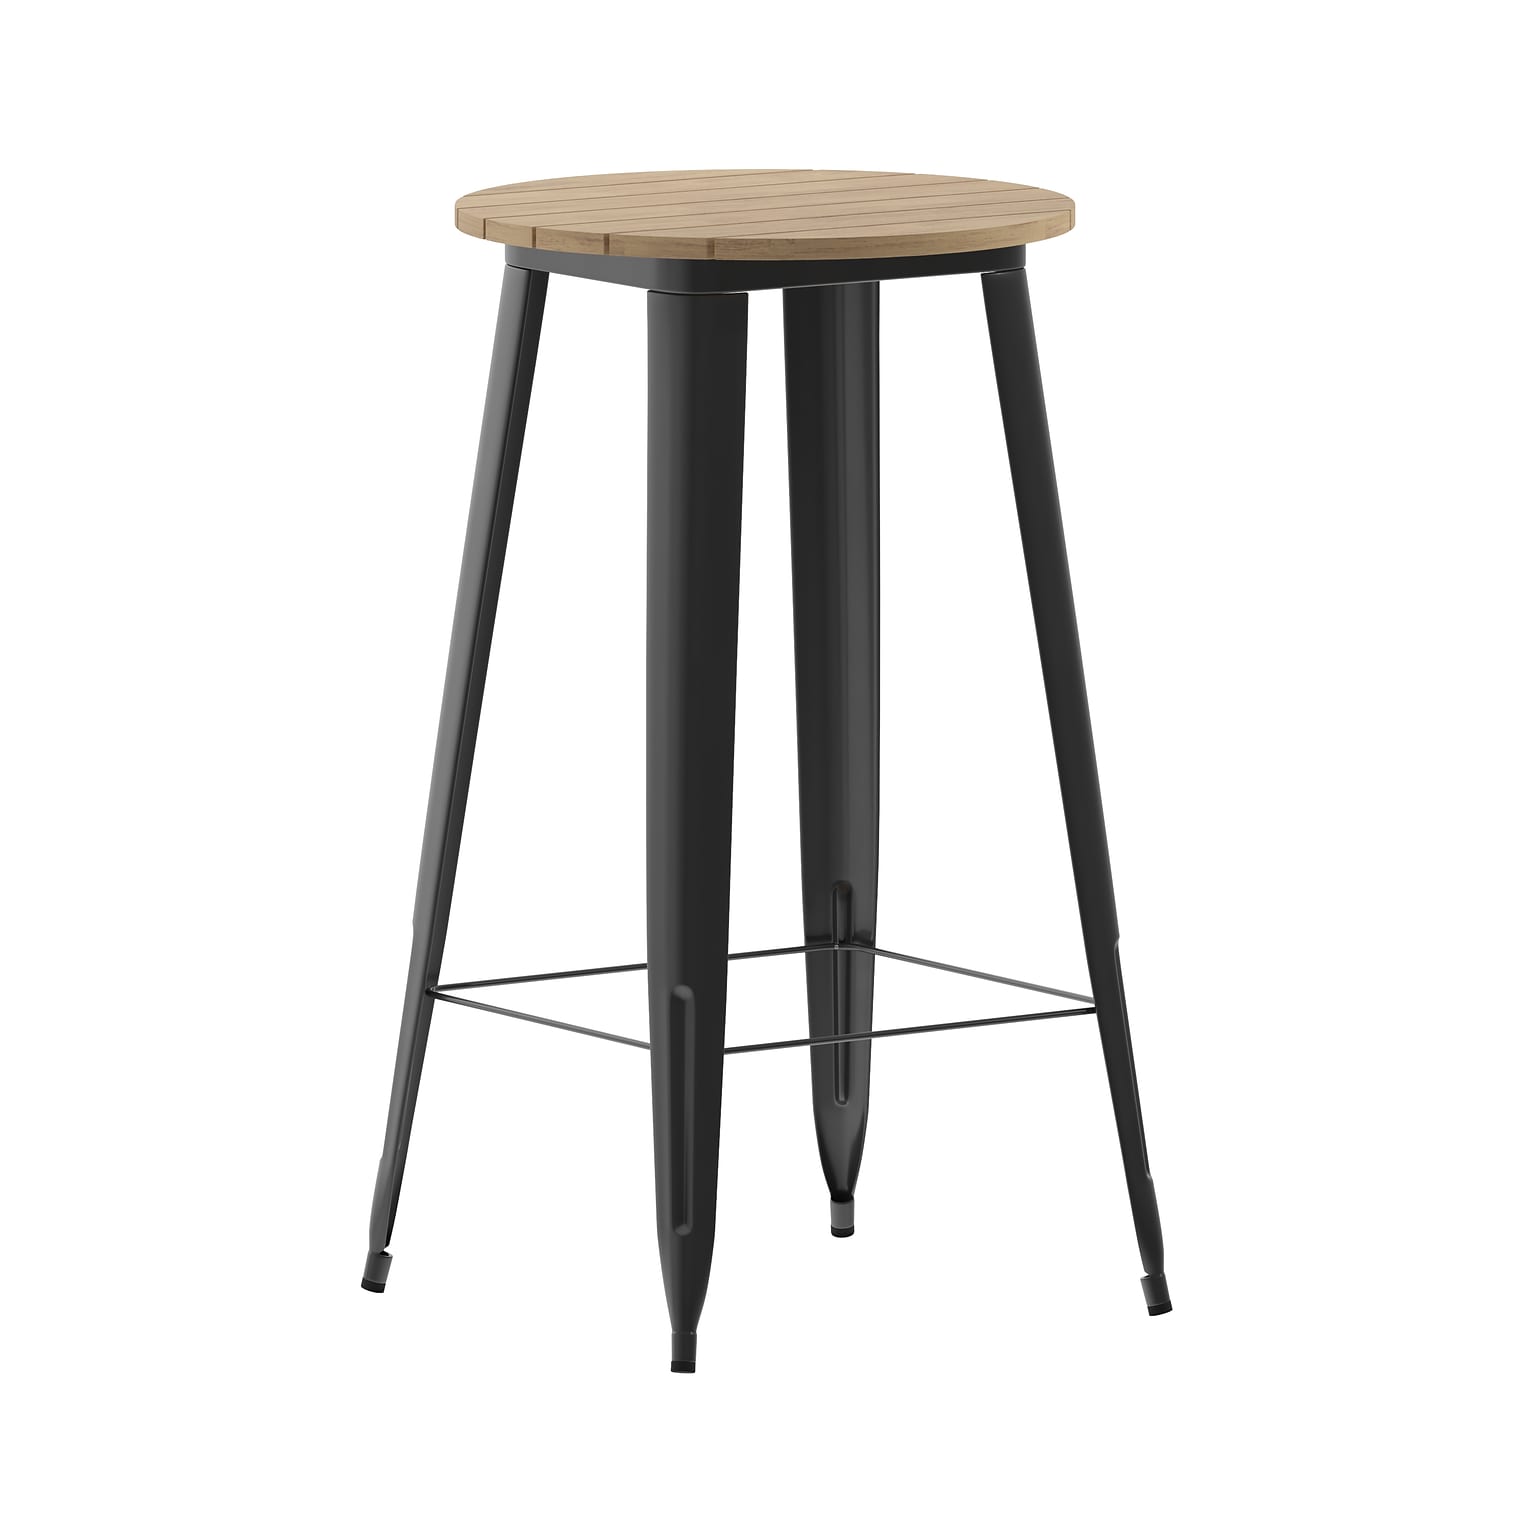 Flash Furniture Declan Indoor/Outdoor Bar Top Table, 42, Brown Top with Black Base (JJT14623H60BRBK)